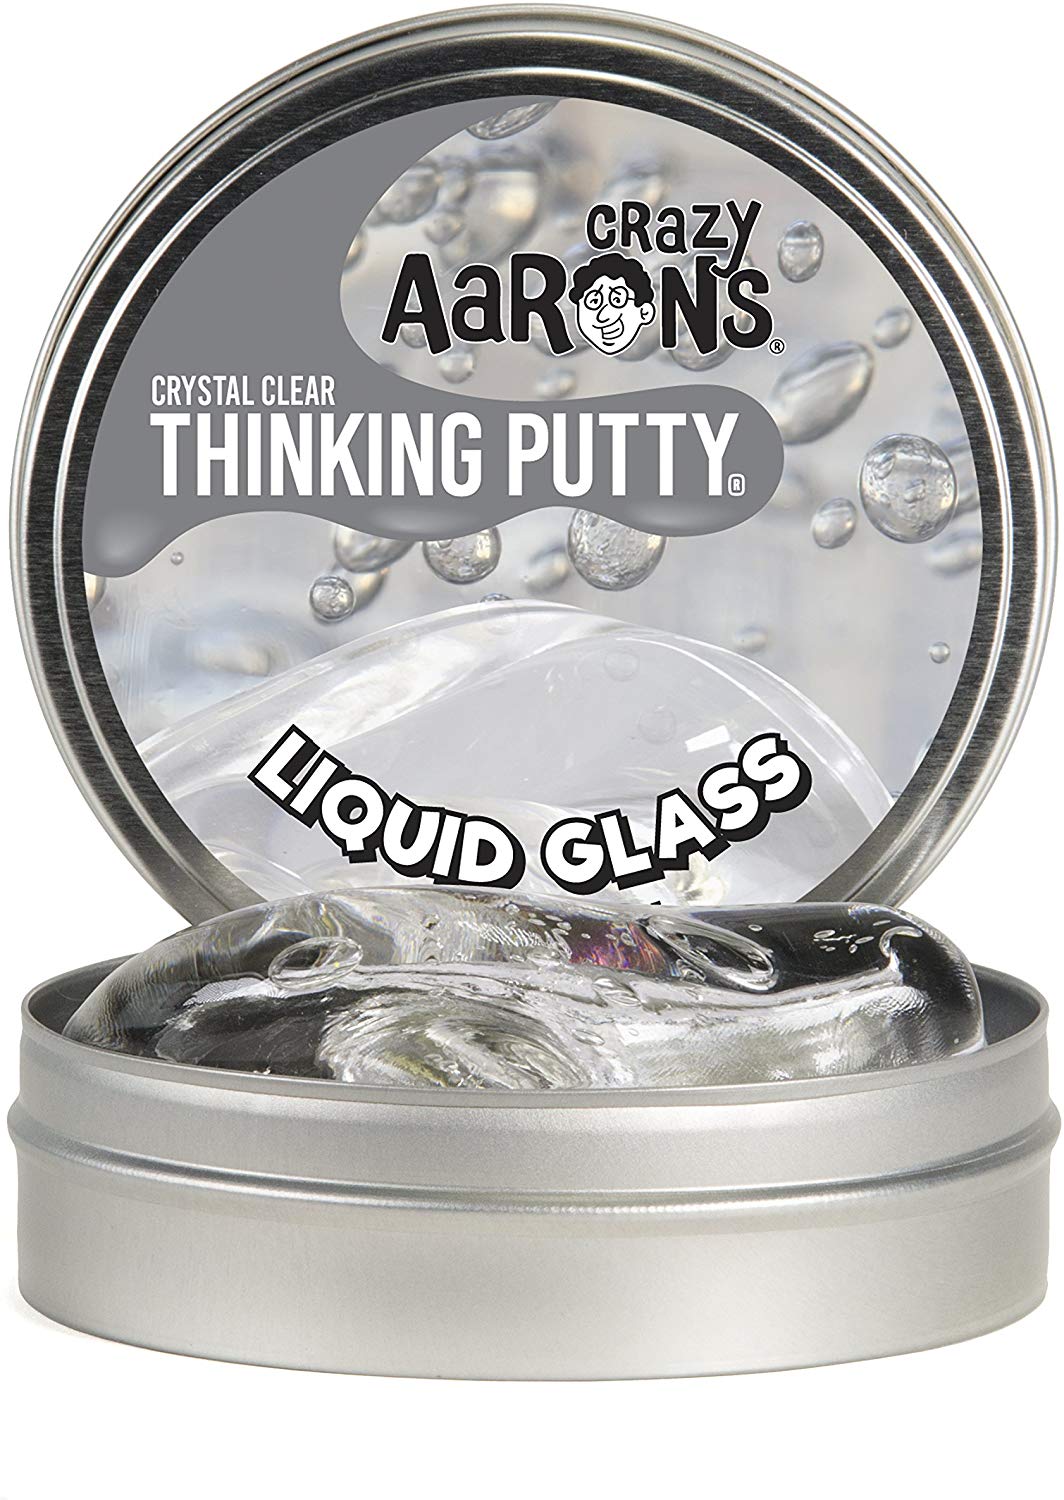 4" Liquid Glass Crazy Aaron's Thinking Putty